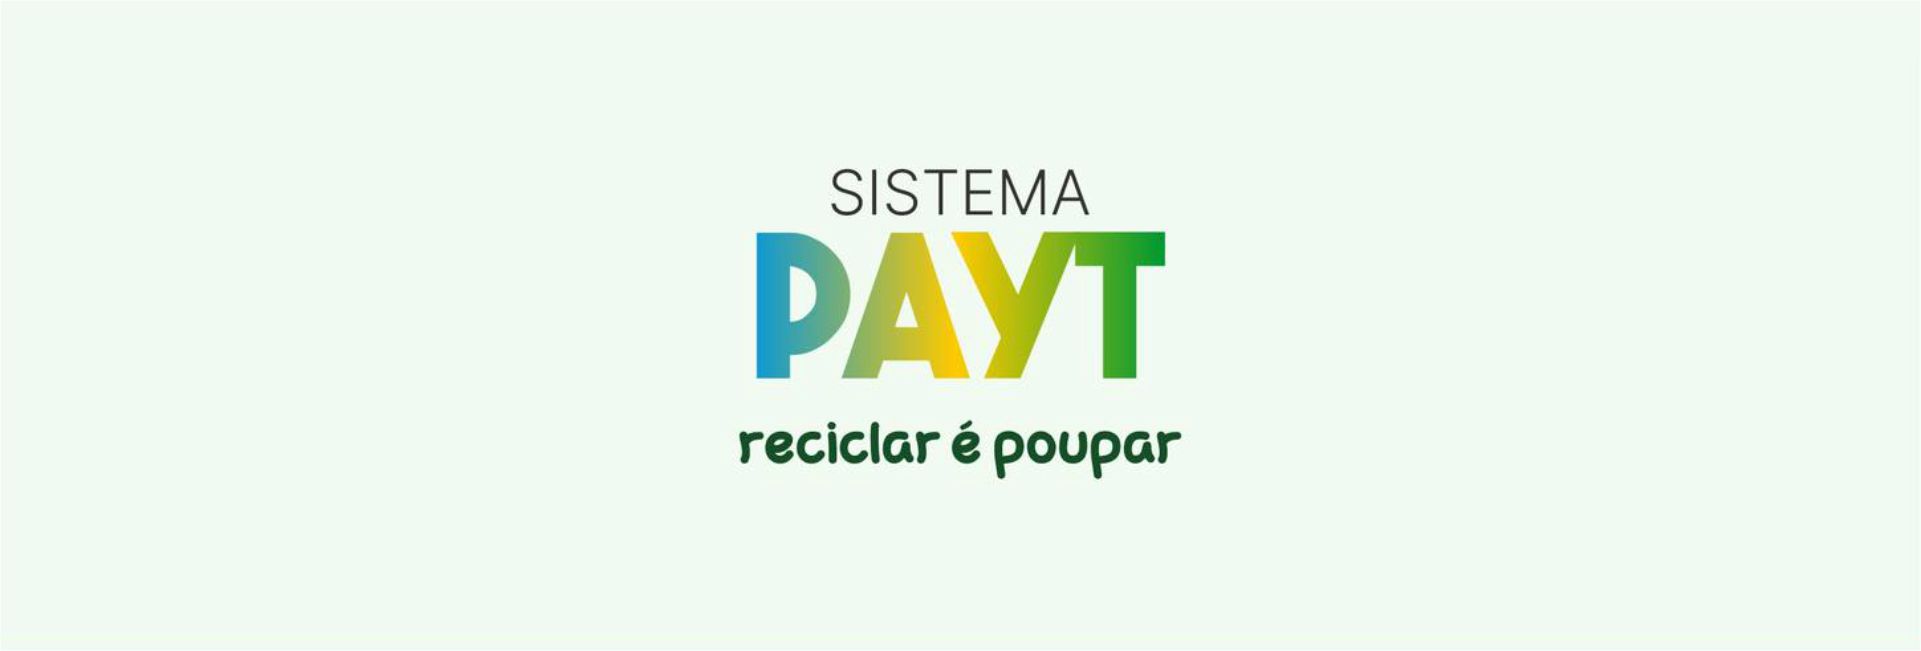 PAYT | Depósito de resíduos recicláveis